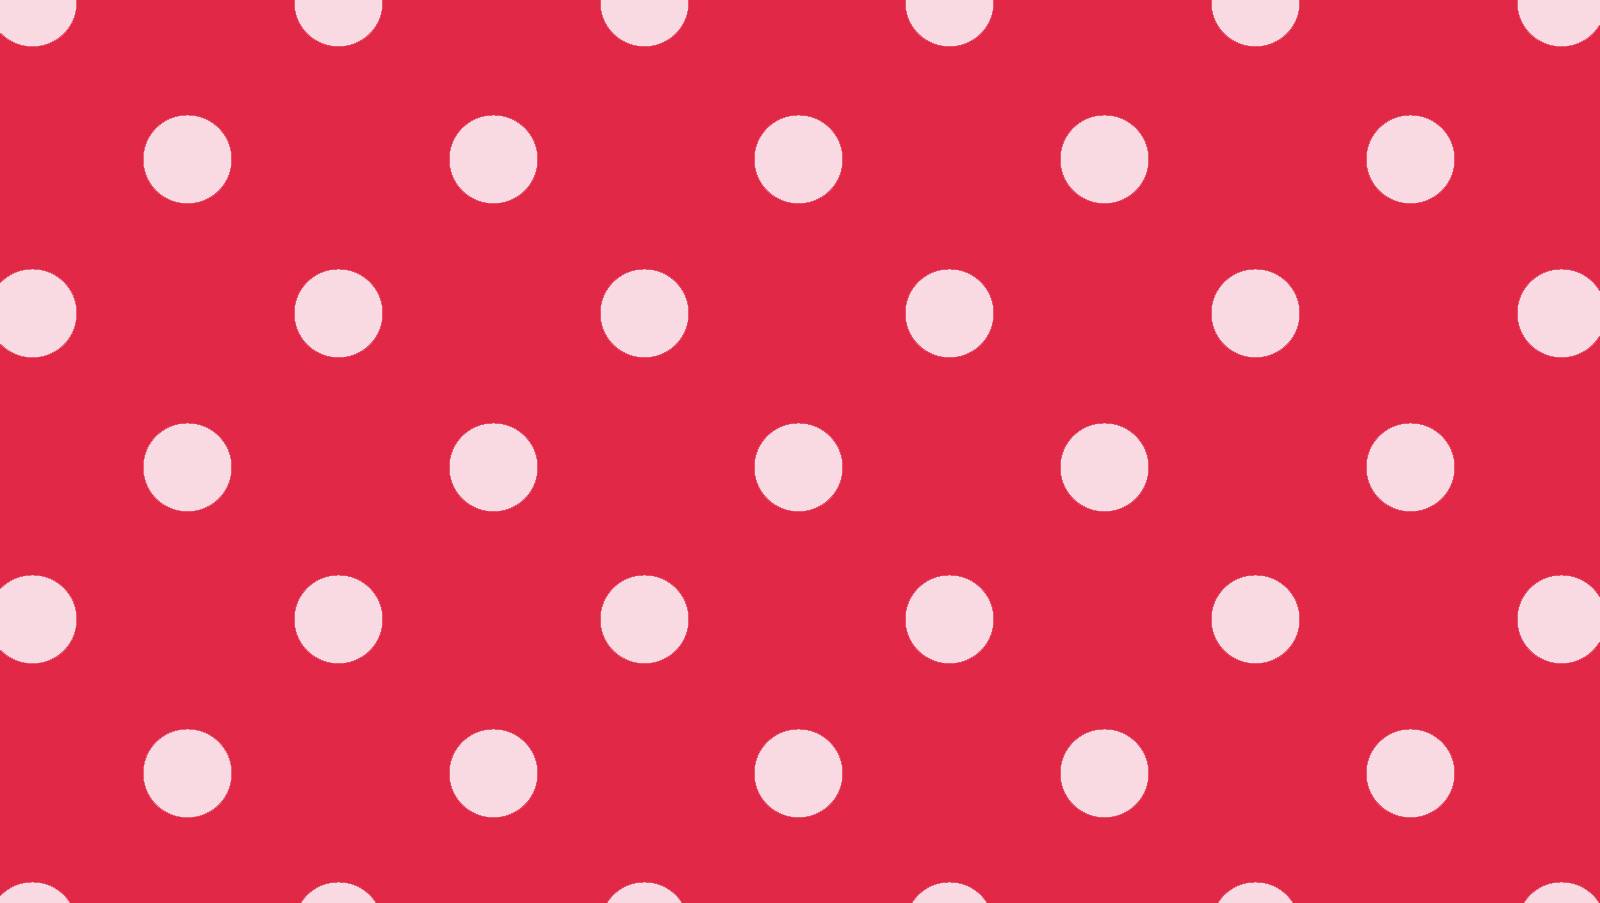 Red Polka Dot Wallpaper Wallpapersafari